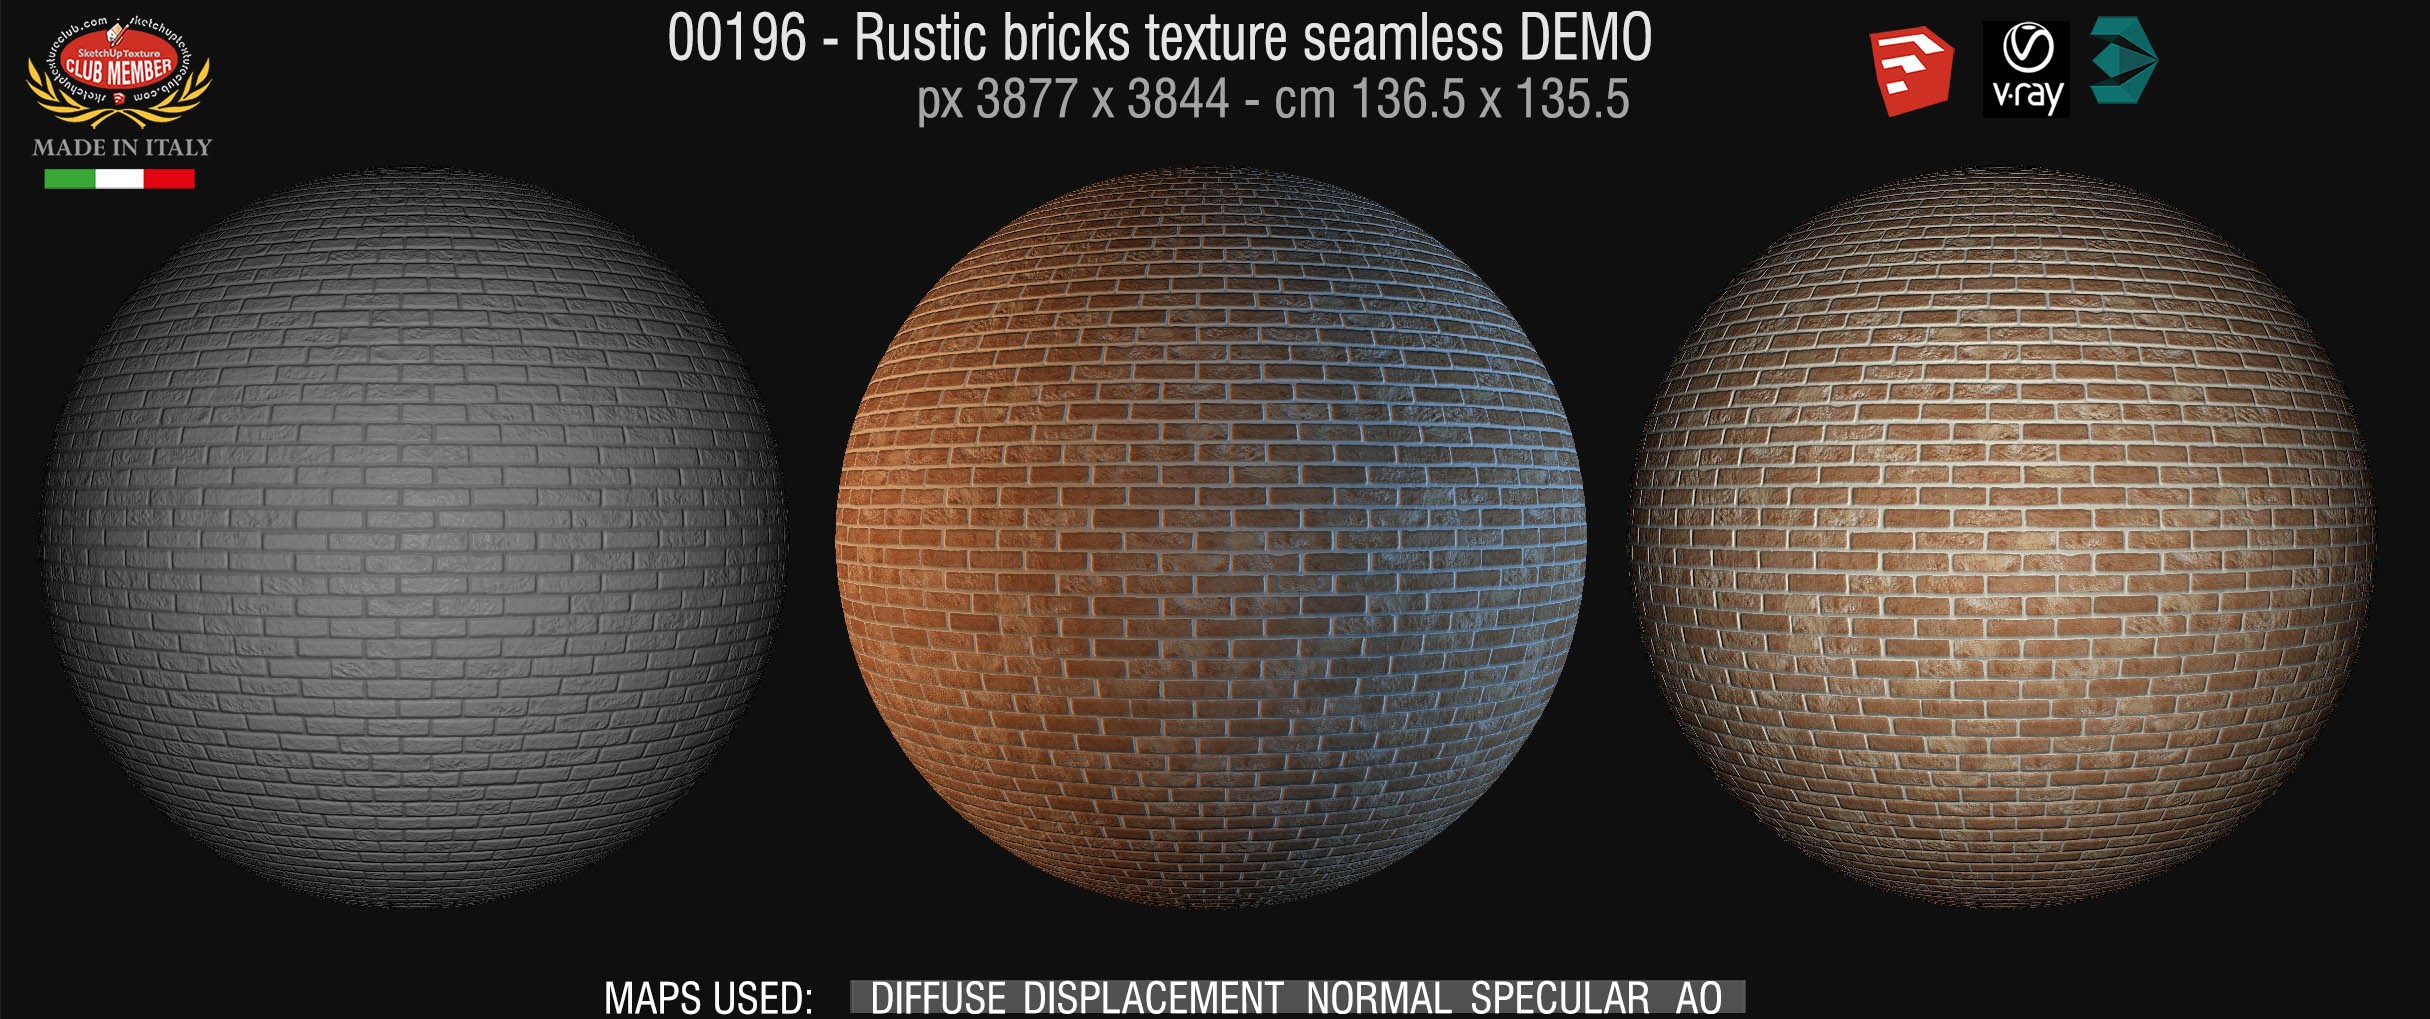 00196 Rustic bricks texture seamless + maps DEMO